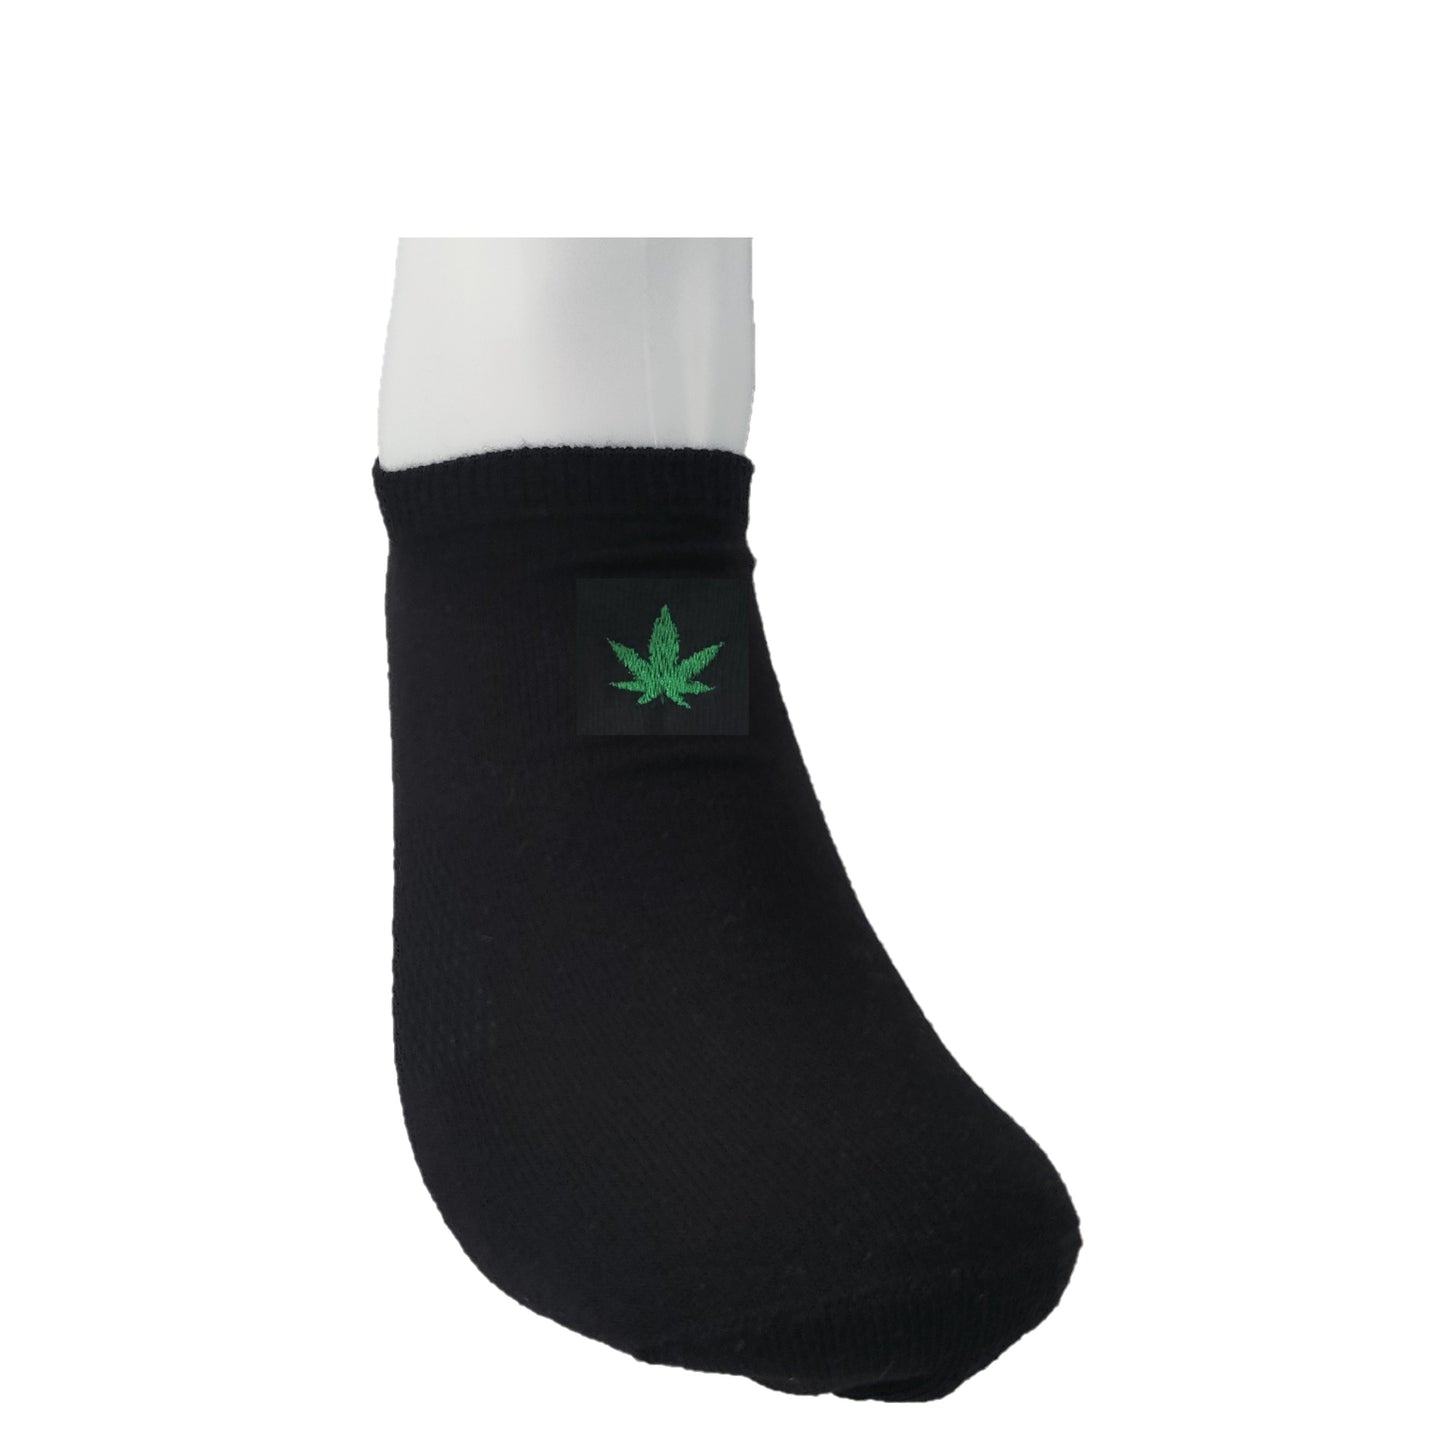 Sneaker-Socken mit Marihuana-Logo und Wunschtext